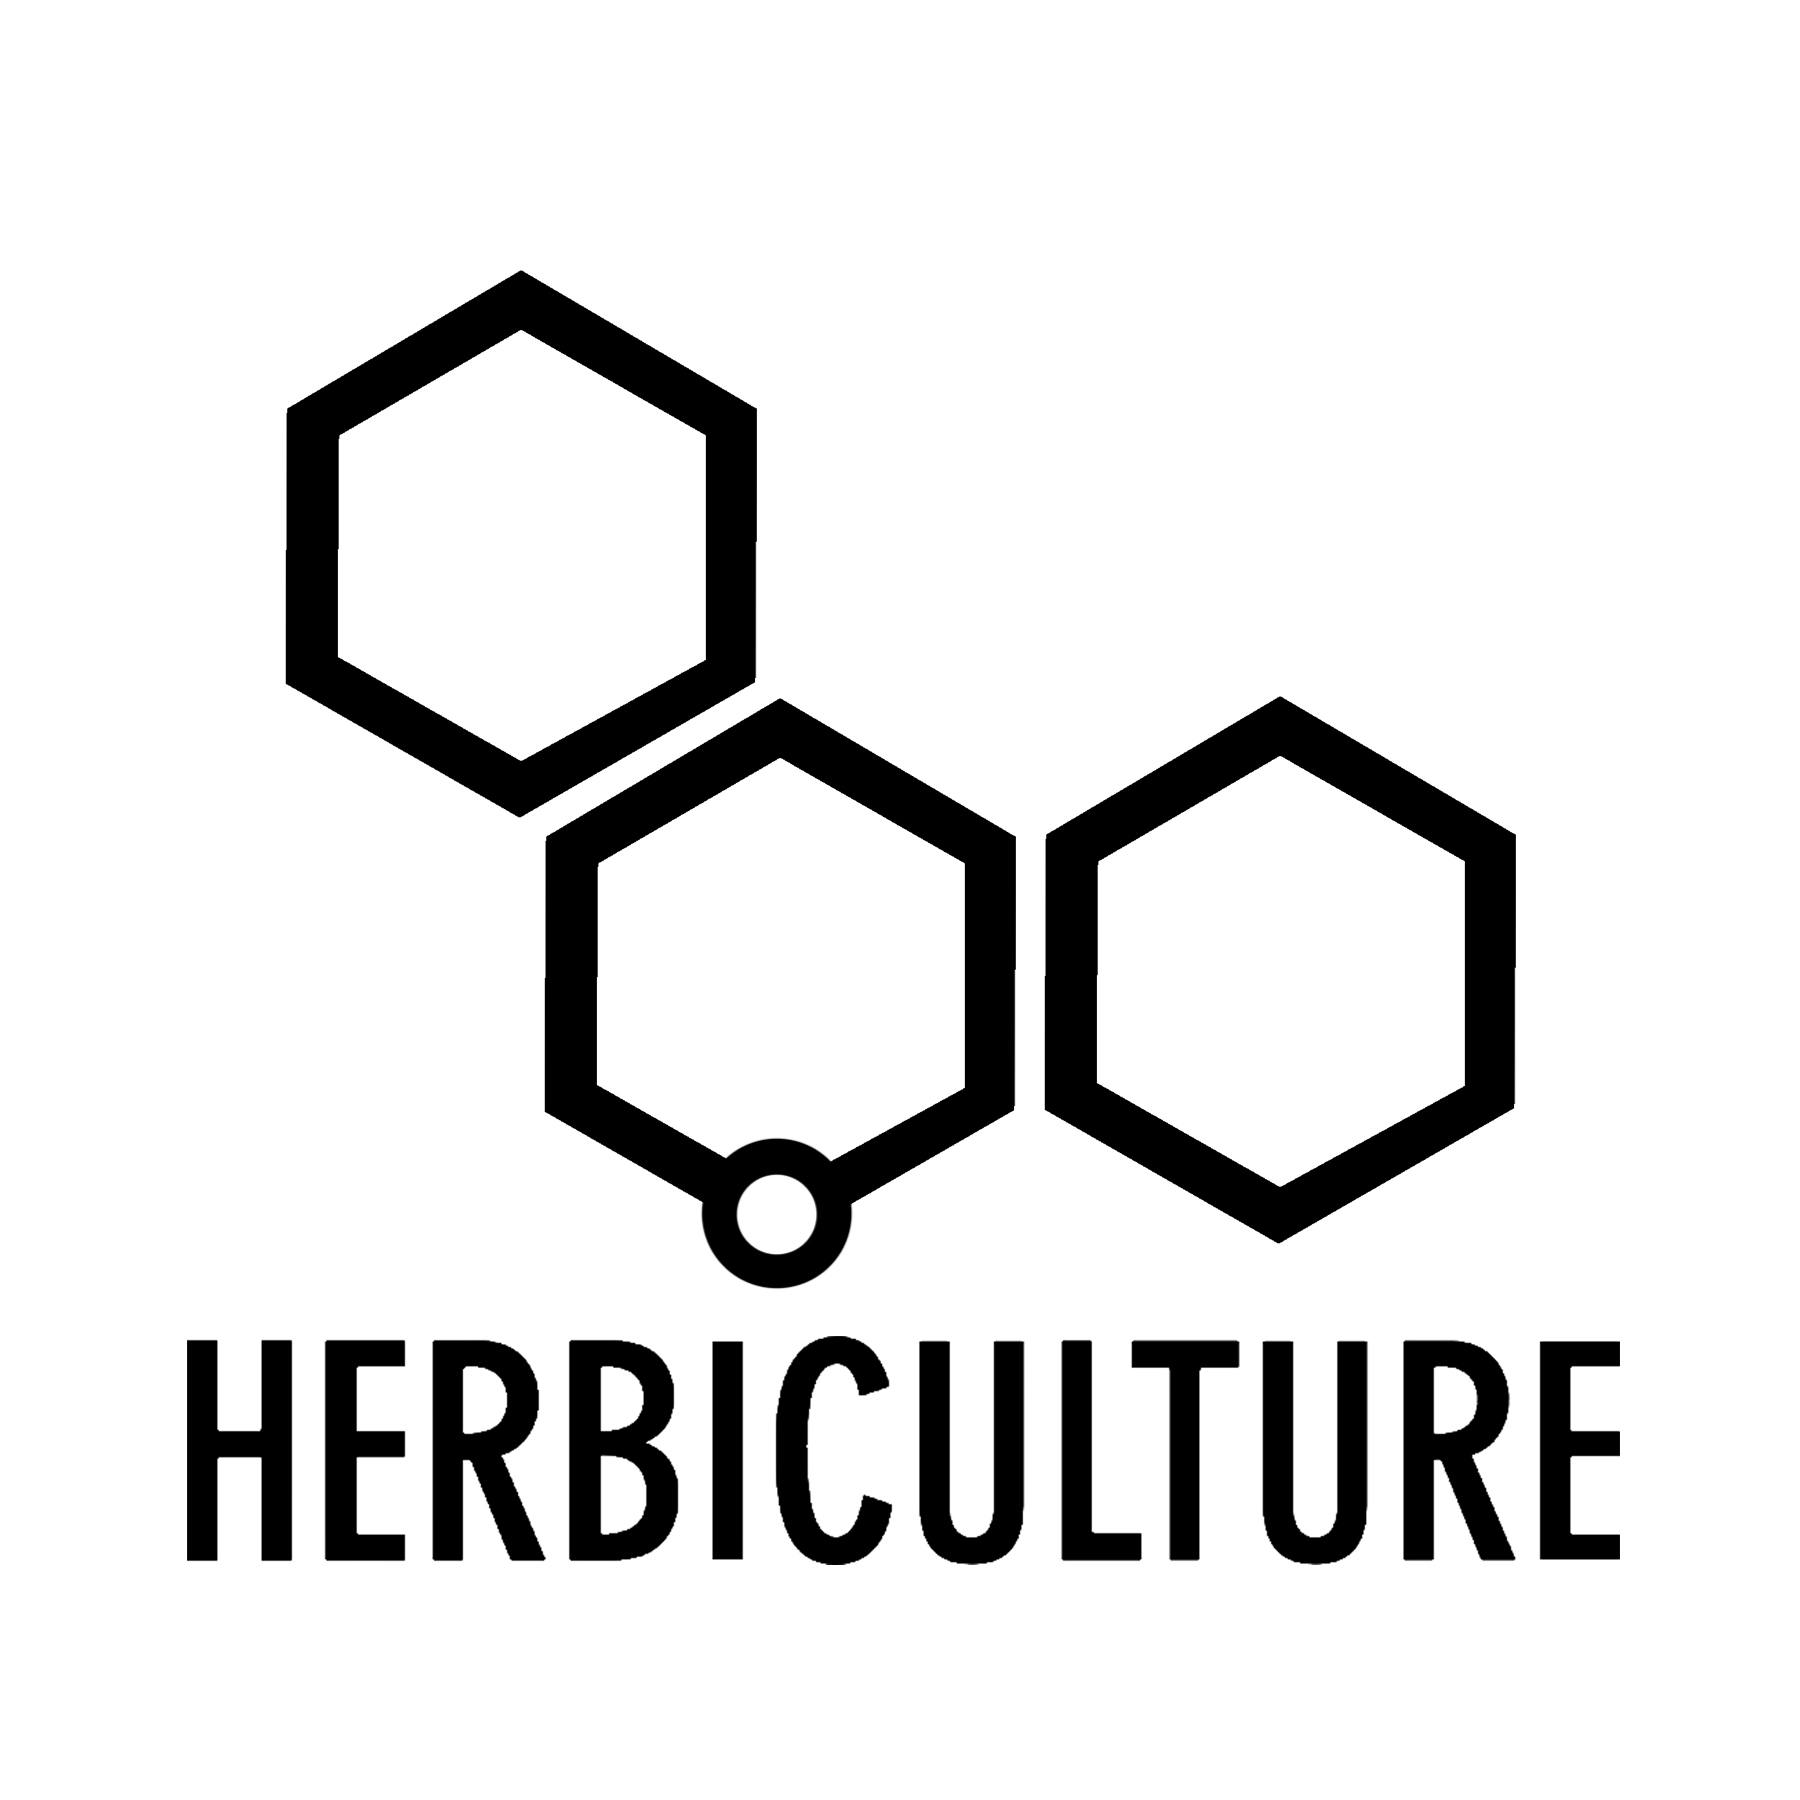 Herbiculture logo